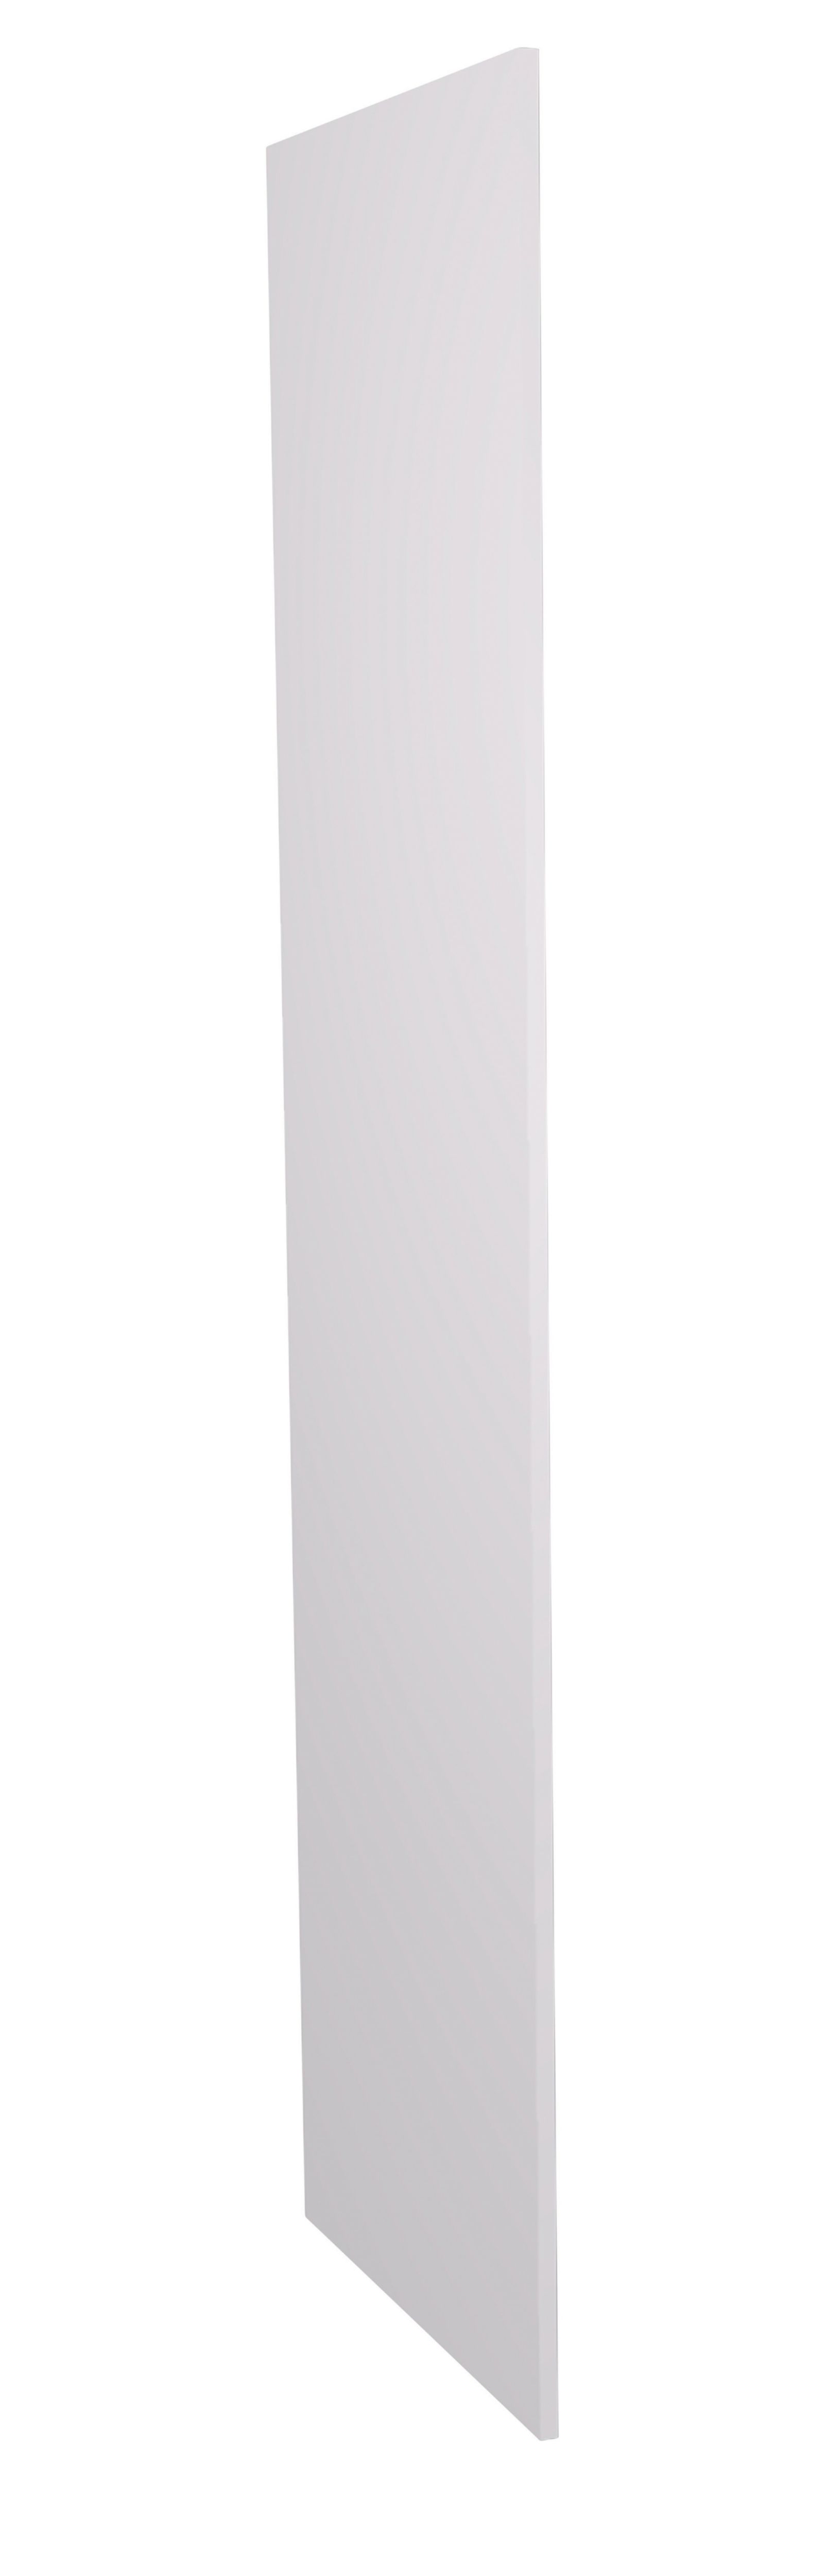 Image of Wickes Orlando/Madison White Decor Tall Panel - 18mm